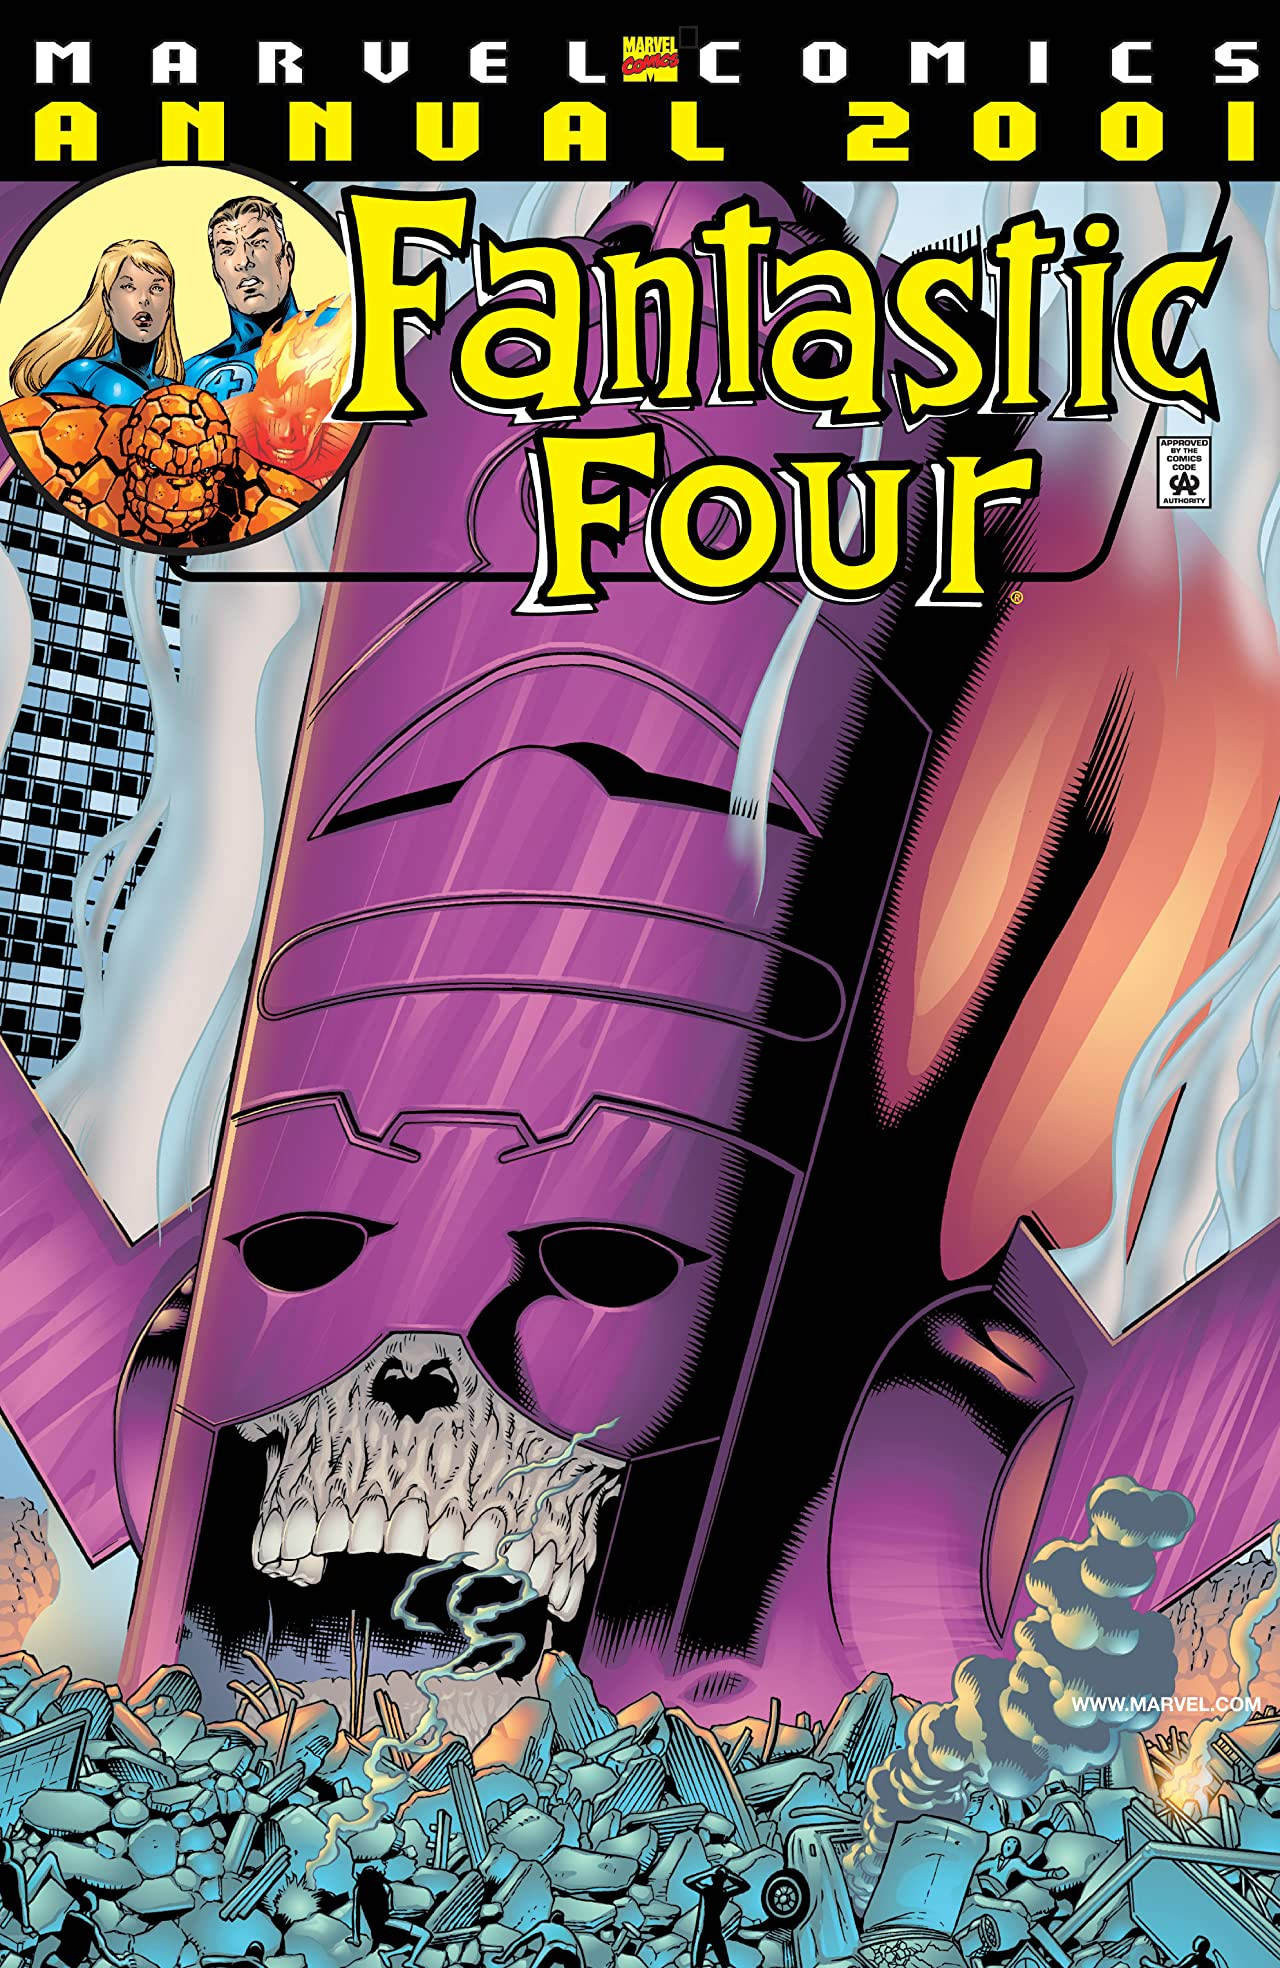 Fantastic Four Annual Vol 1 2001 | Marvel Database | Fandom